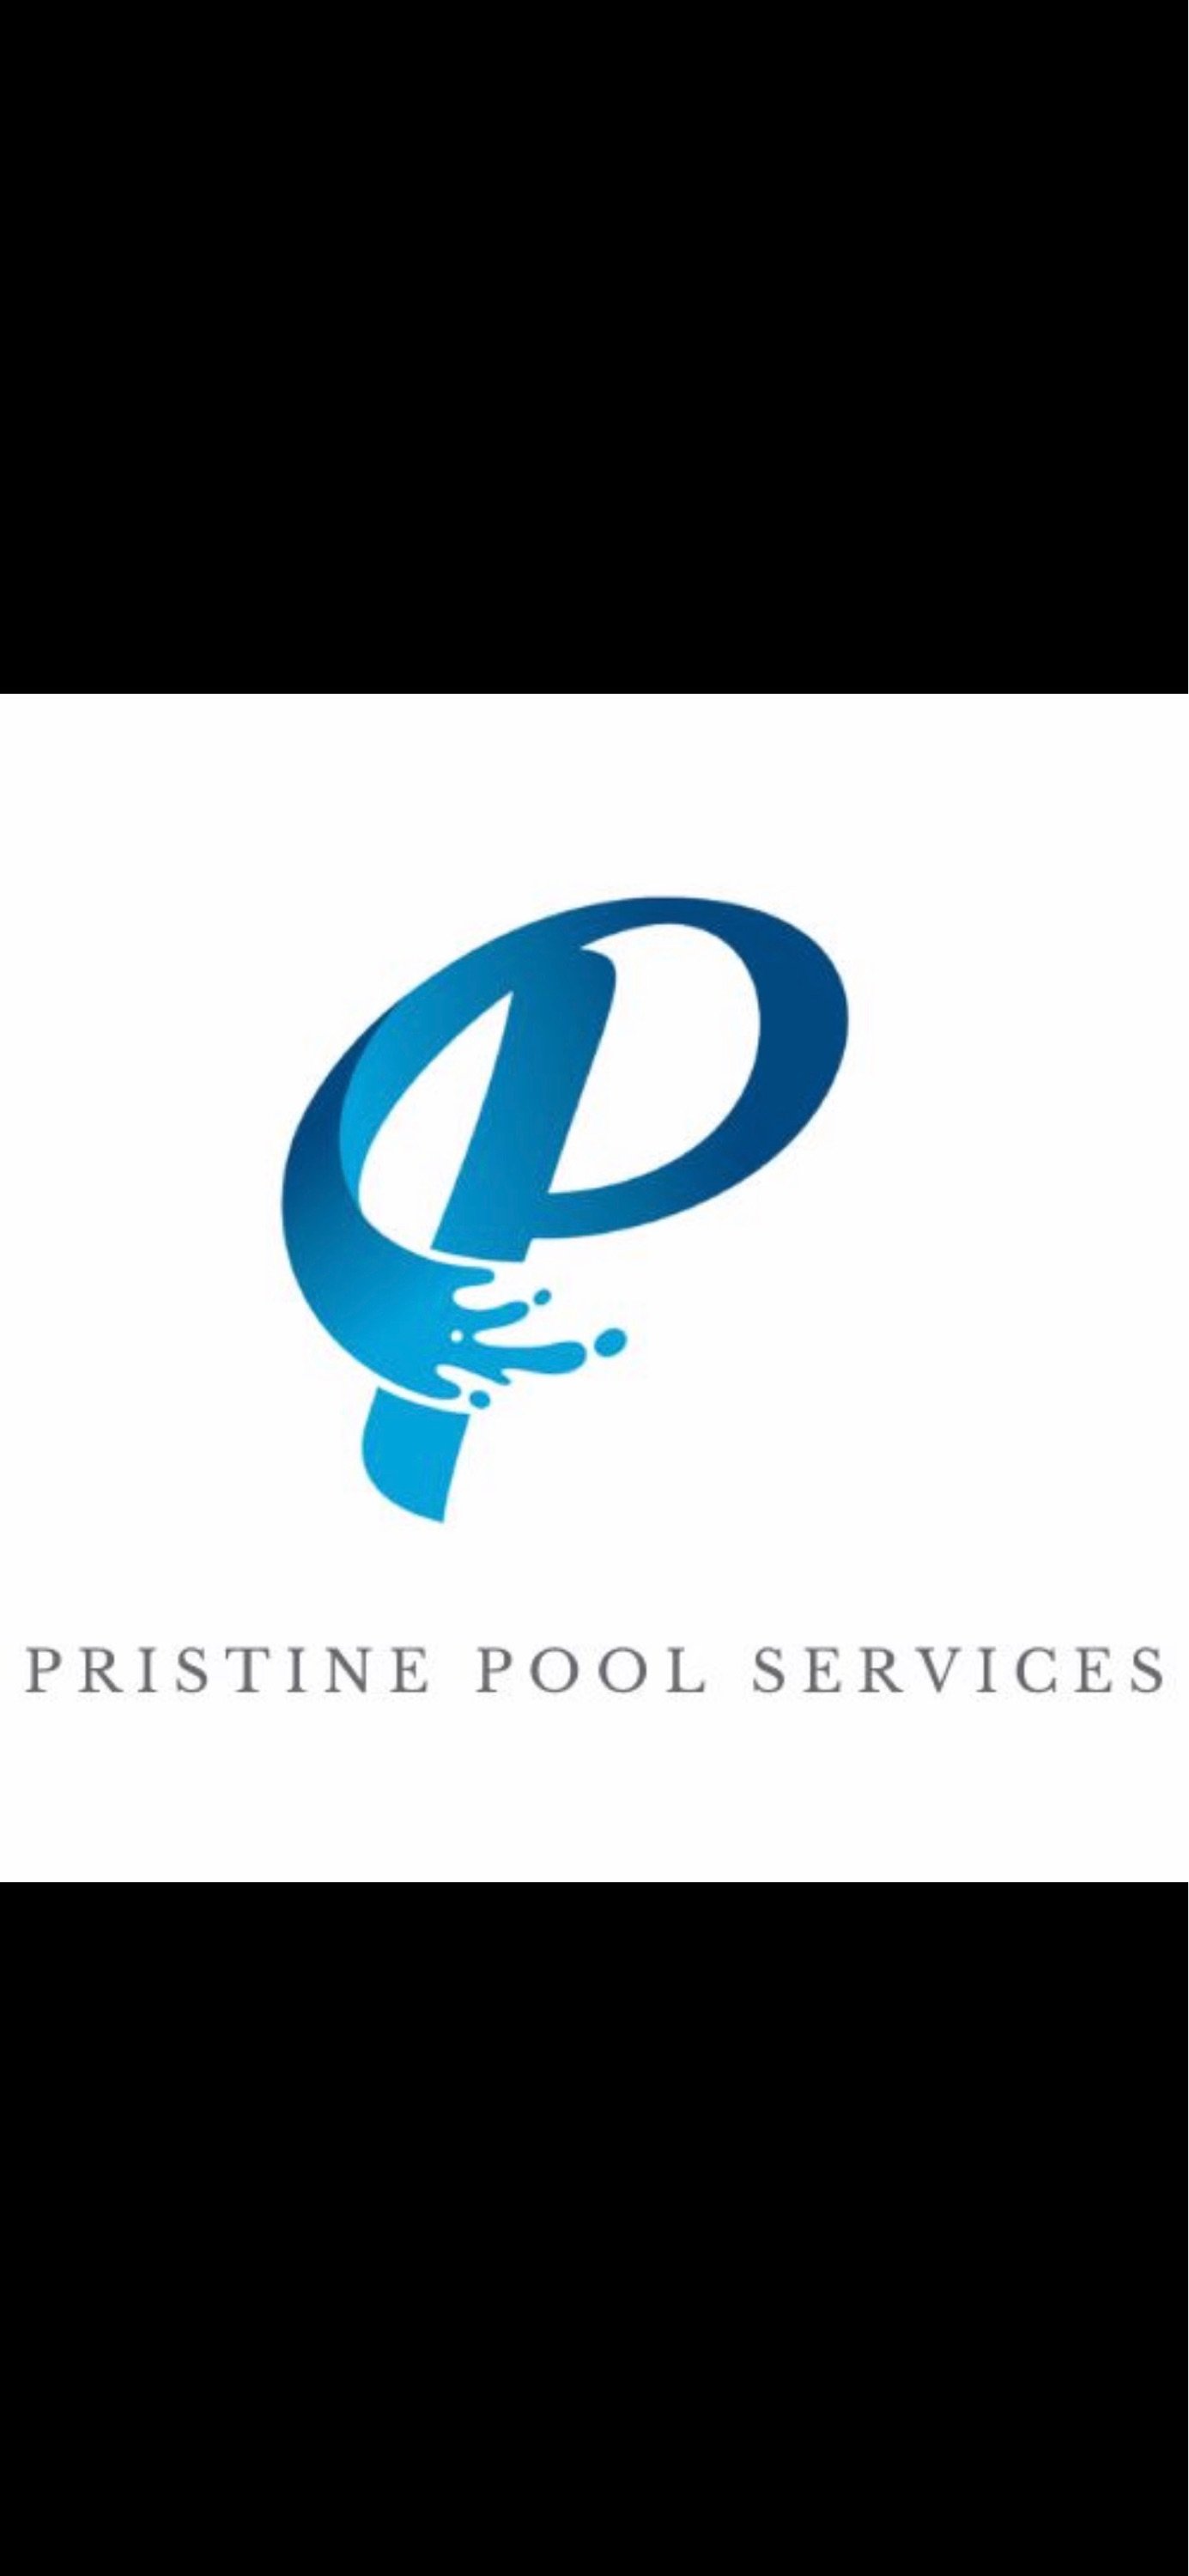 Pristine Pool Services Logo